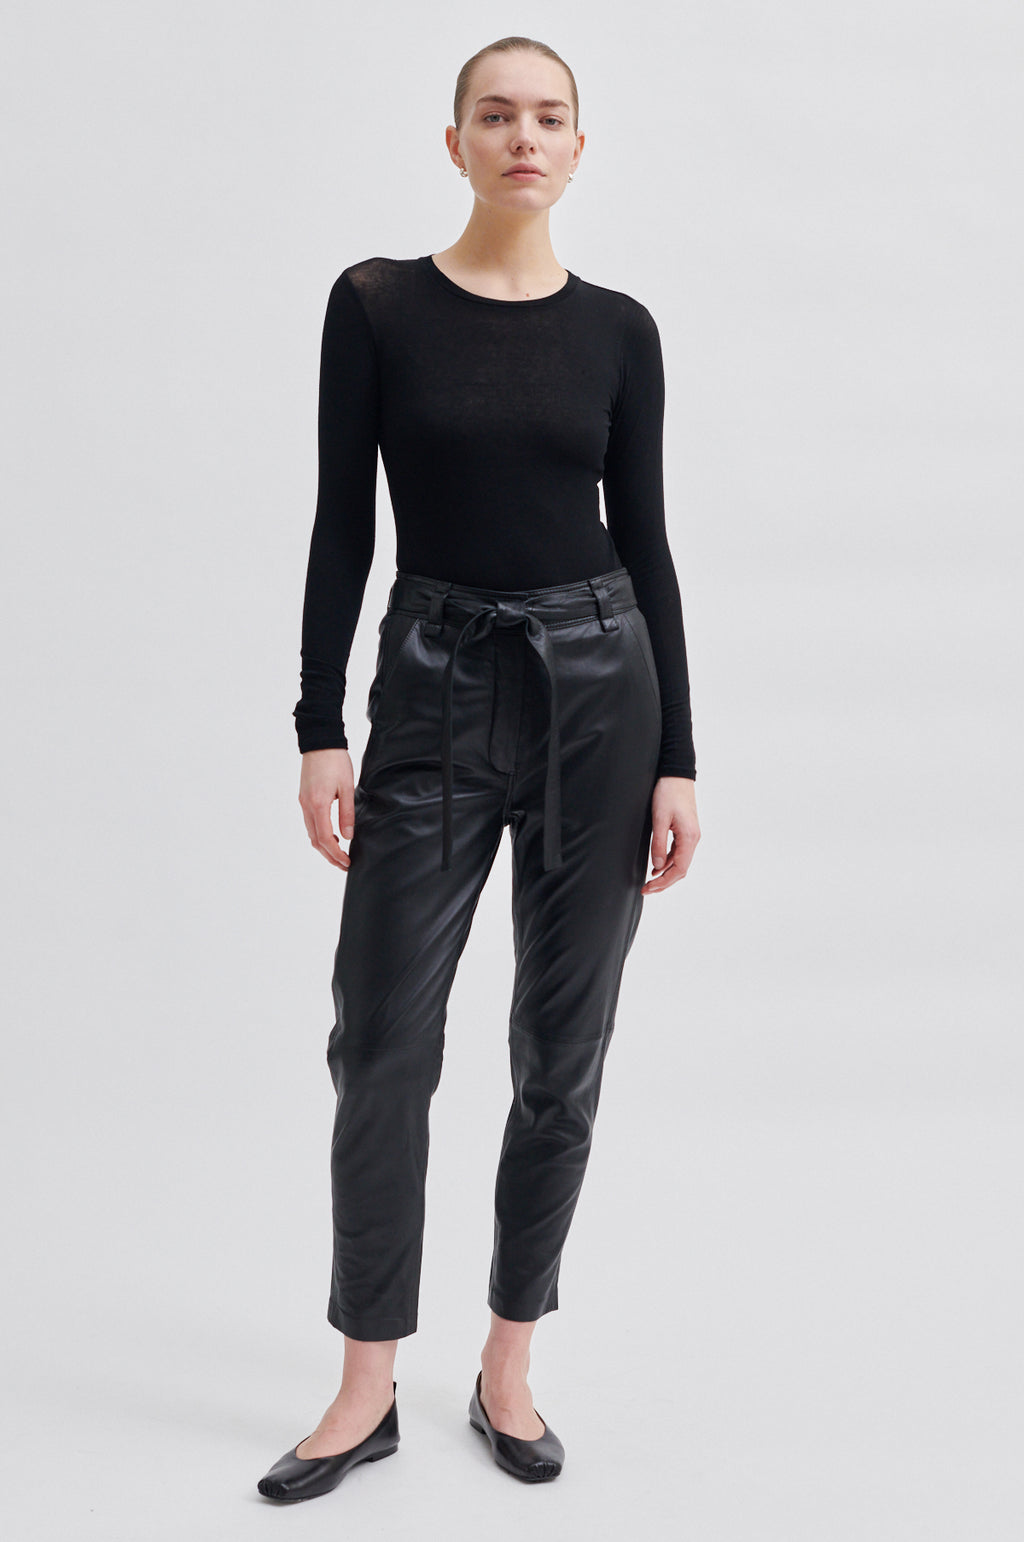 ZARA Cuffed Leather Pants for Women